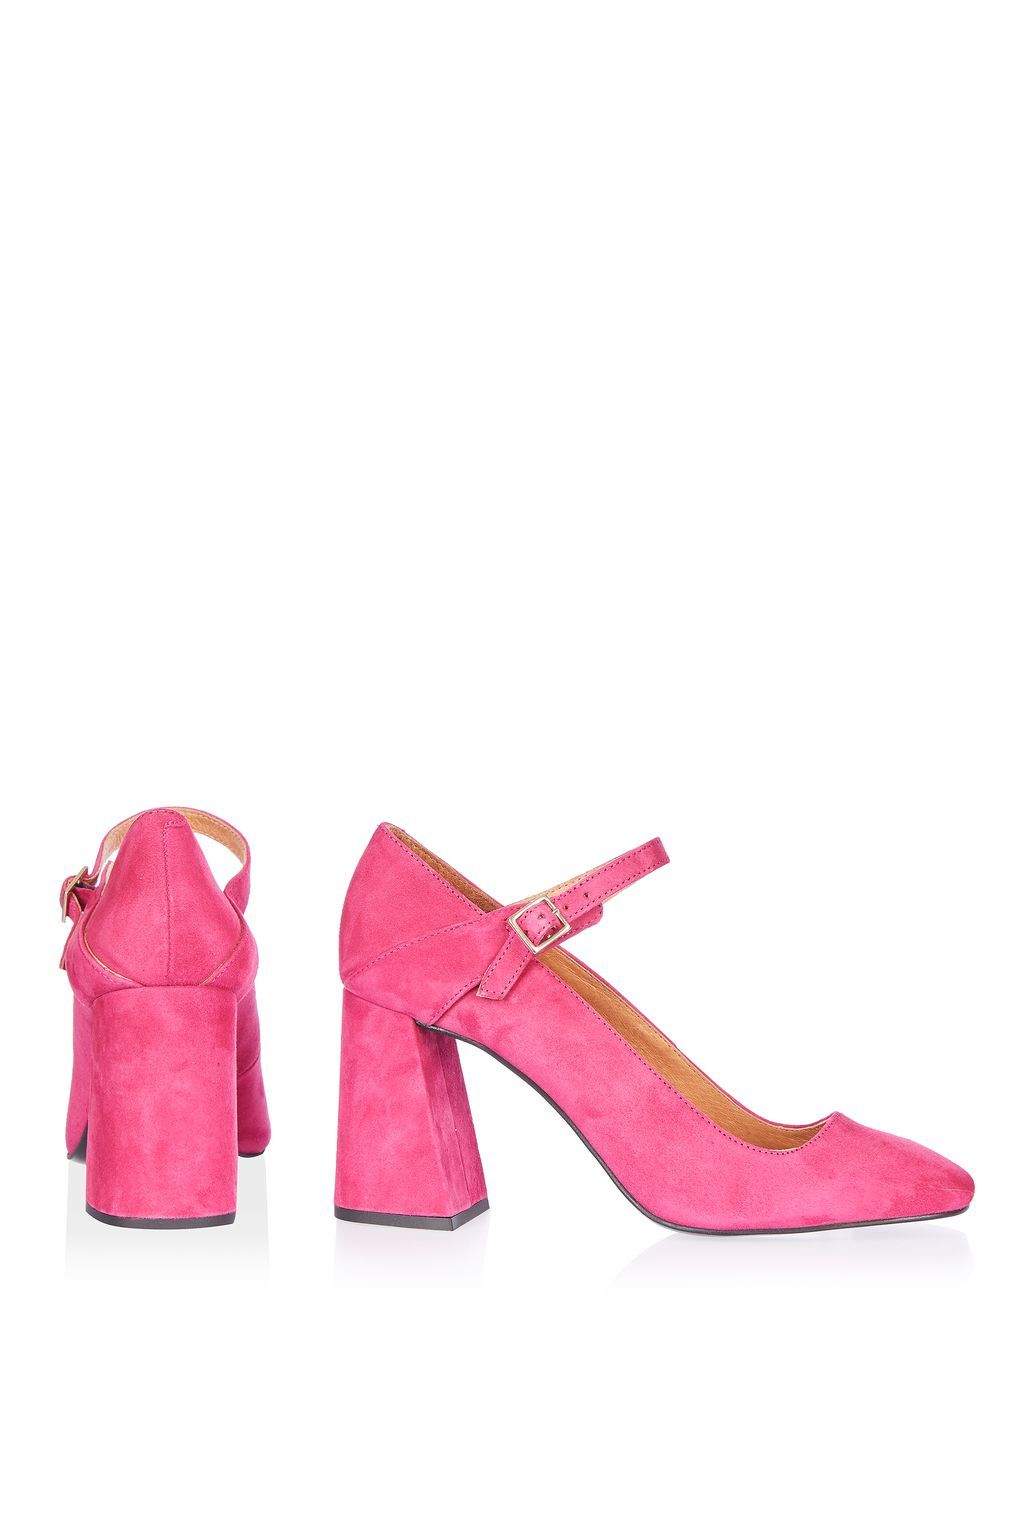 Tendencia 'pink', zapatos de Topshop (98€)